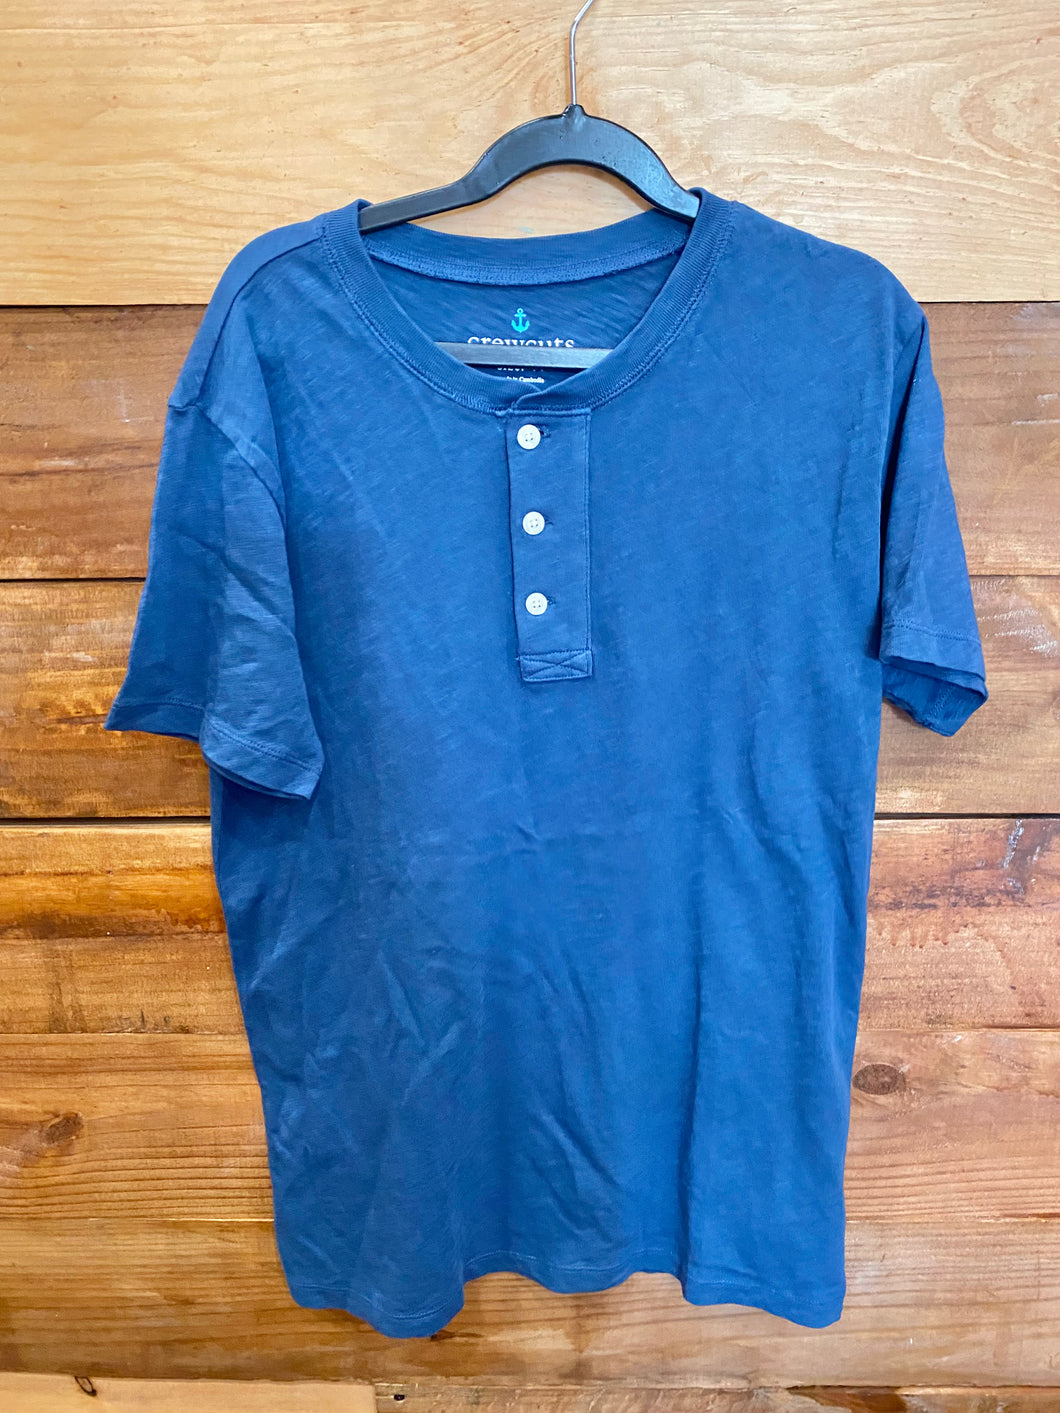 Crewcuts Blue Shirt Size 14